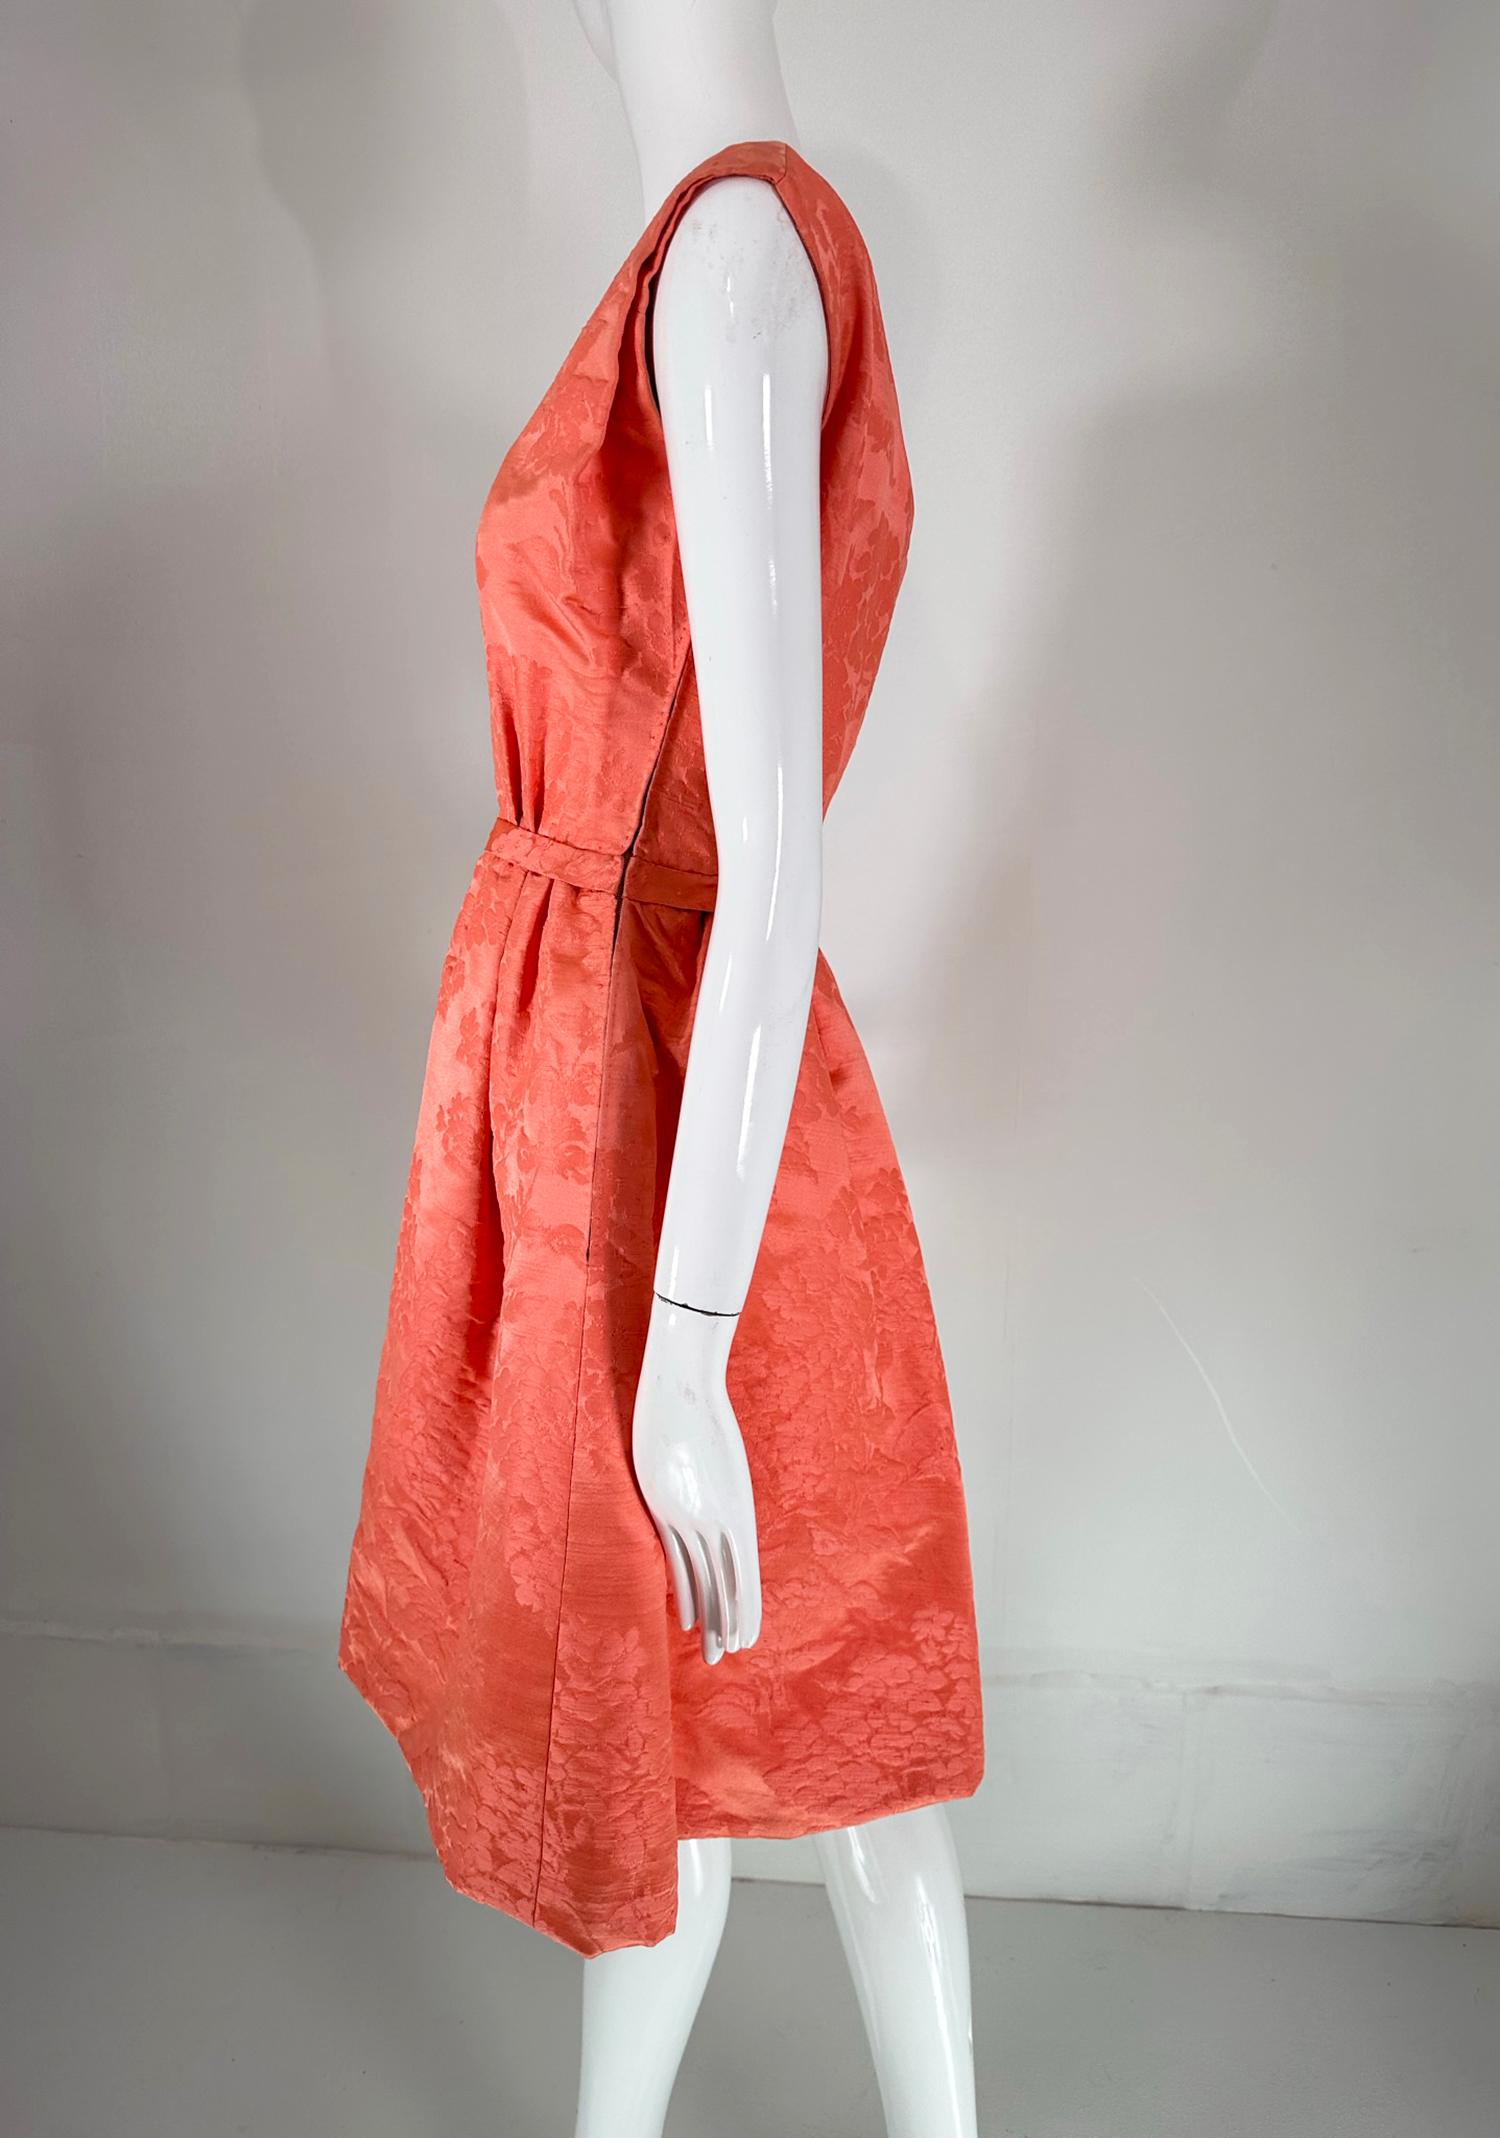 Lanvin Castello Haute Couture Coral Silk Brocade Coat & Dress Ensemble 1950s For Sale 3